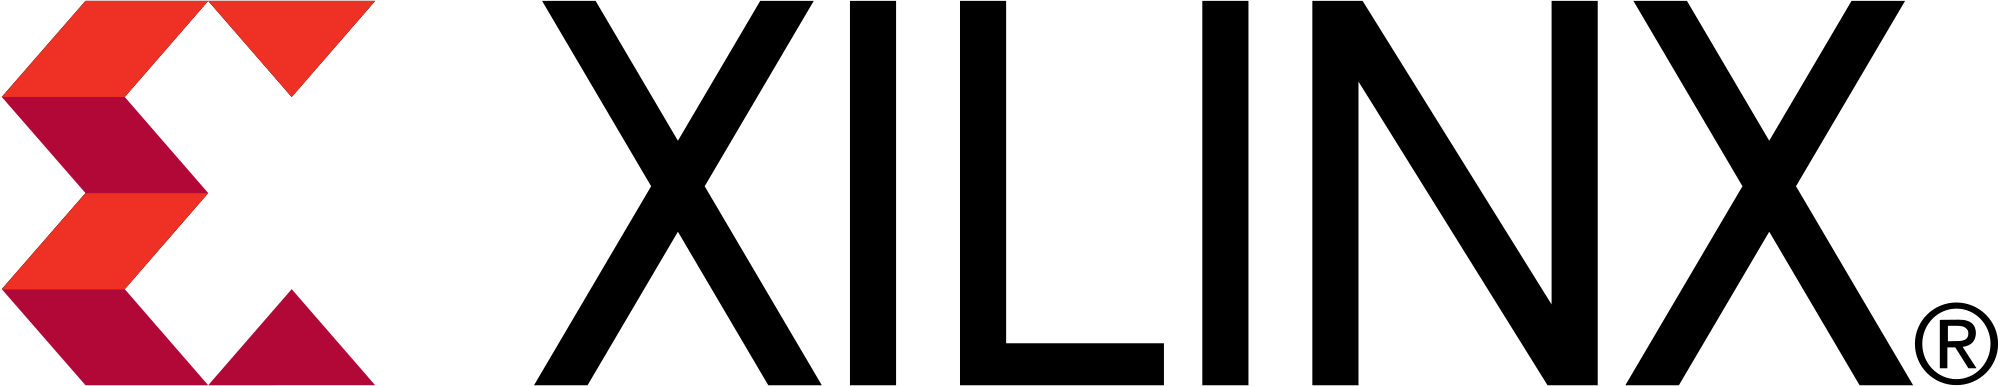 Xilinx Logo - File:Xilinx logo 2008.svg - Wikimedia Commons